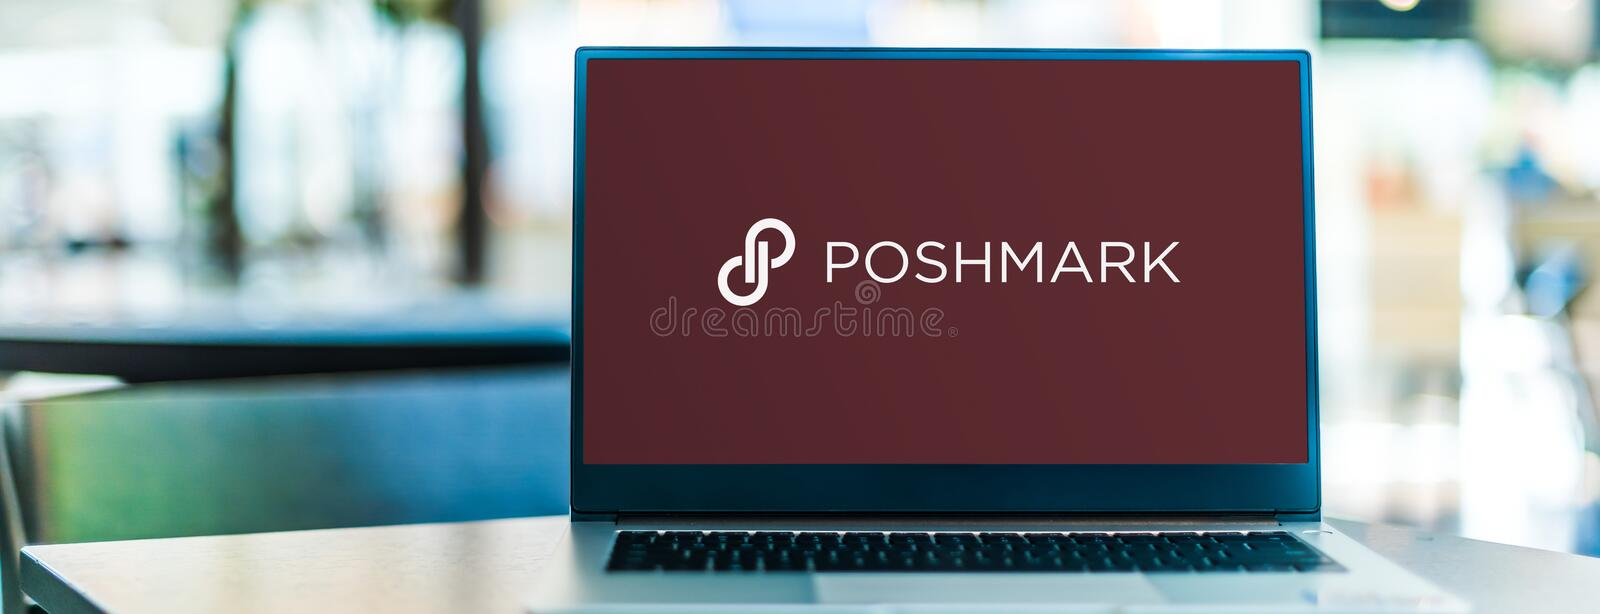 Poshmark Logo on a computer